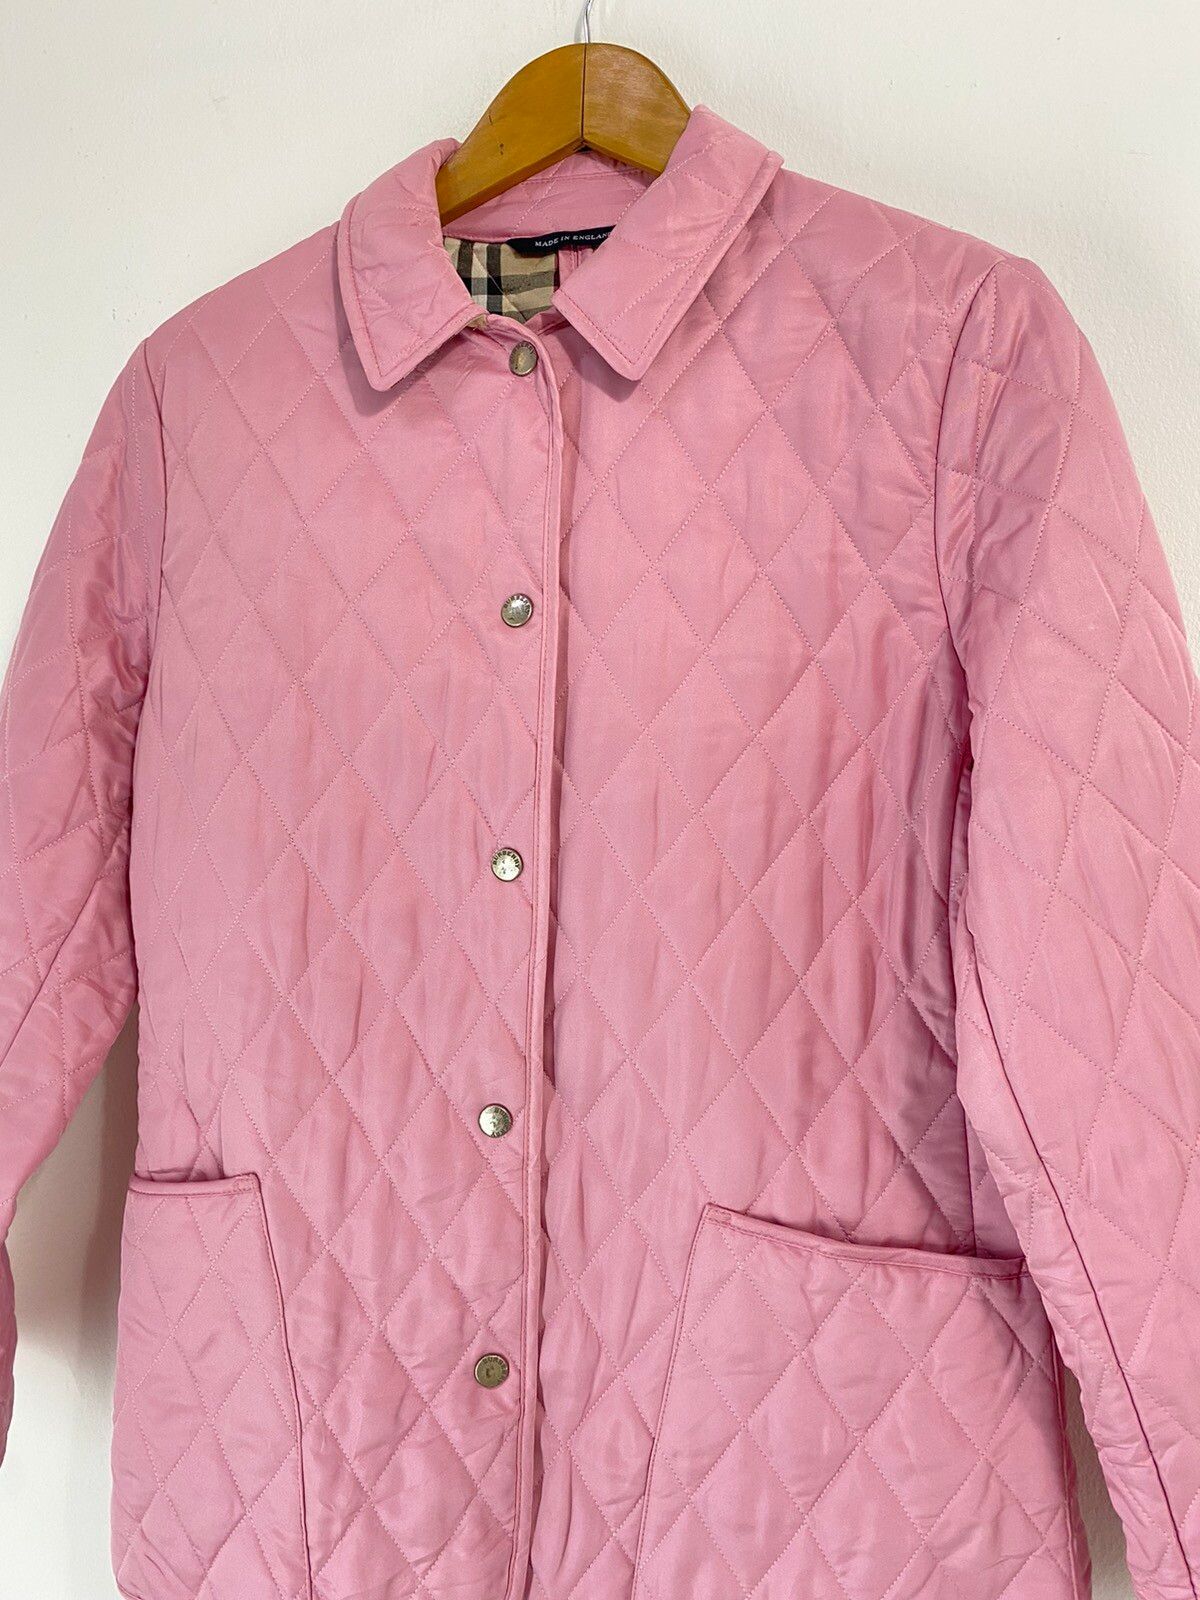 Burberry Quilted Jacket Design Pink Color Nova Check - 4